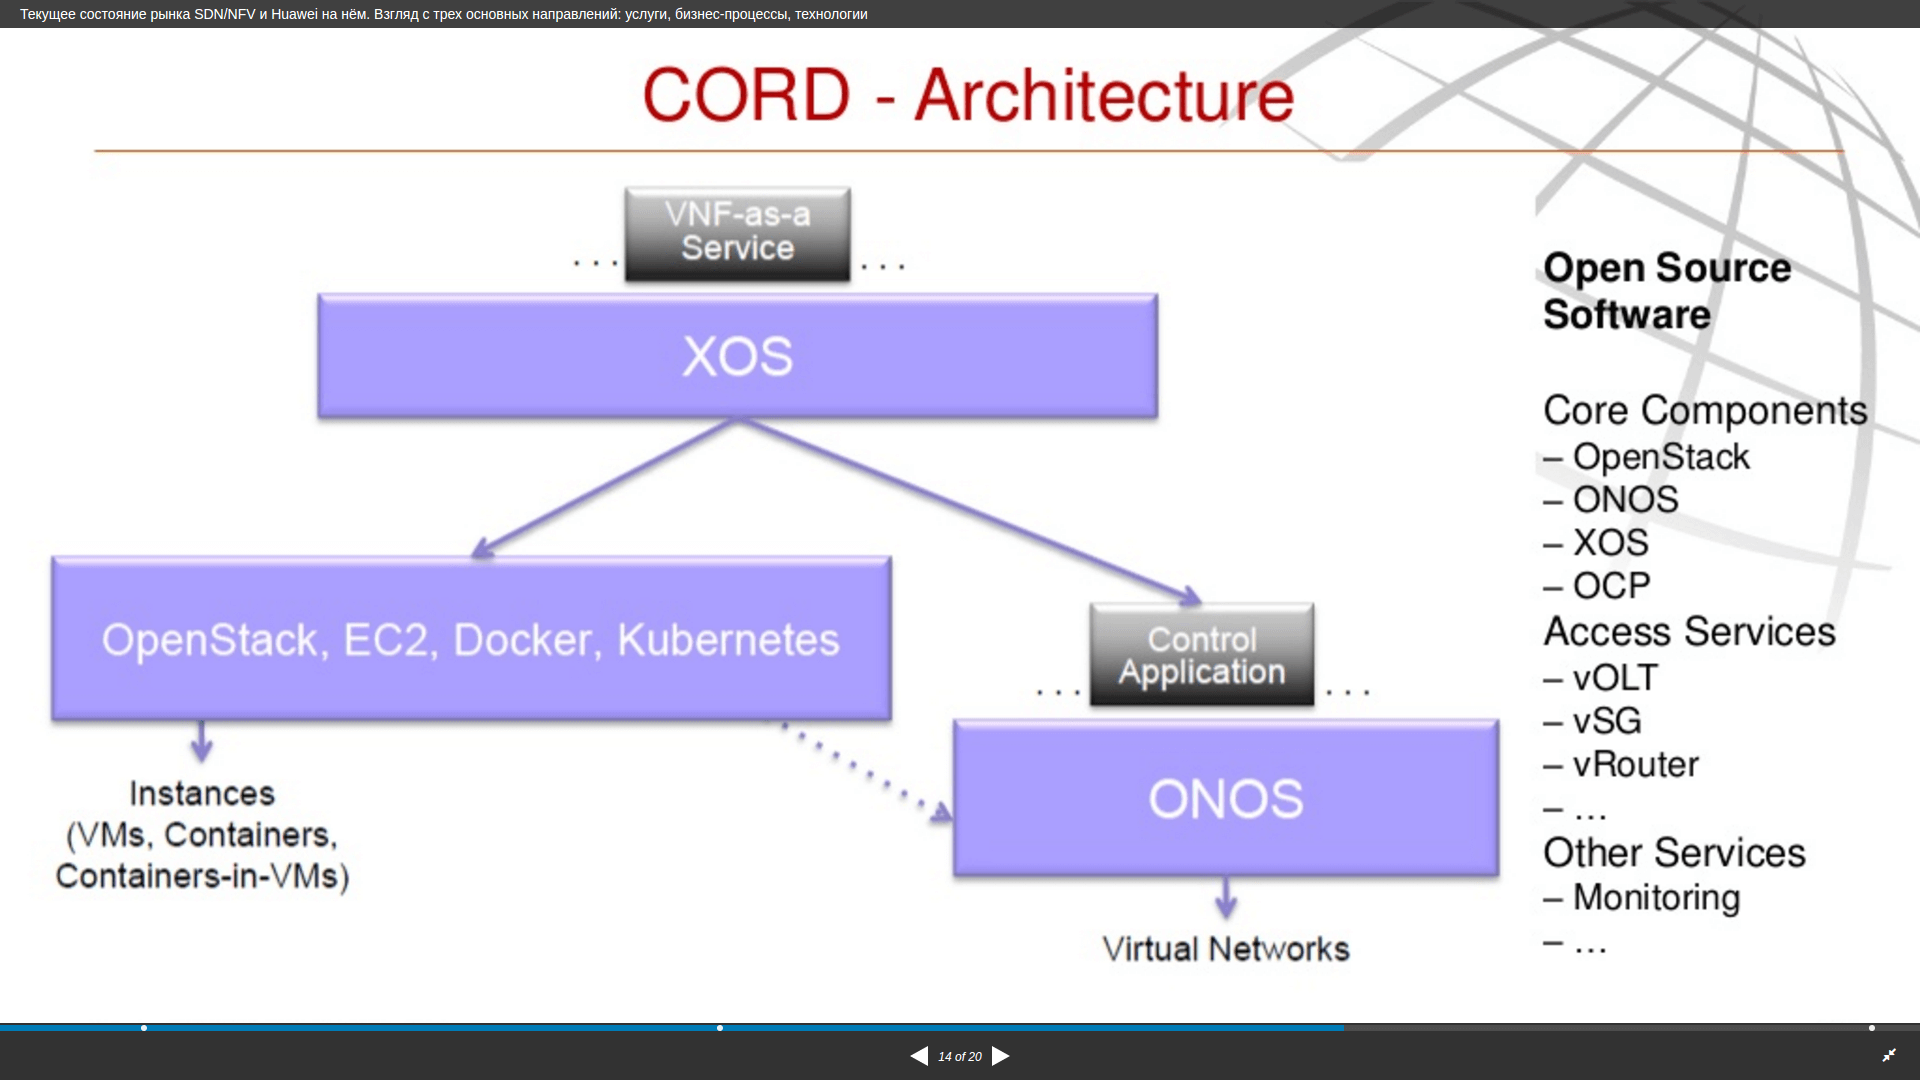 CORD platform architecture